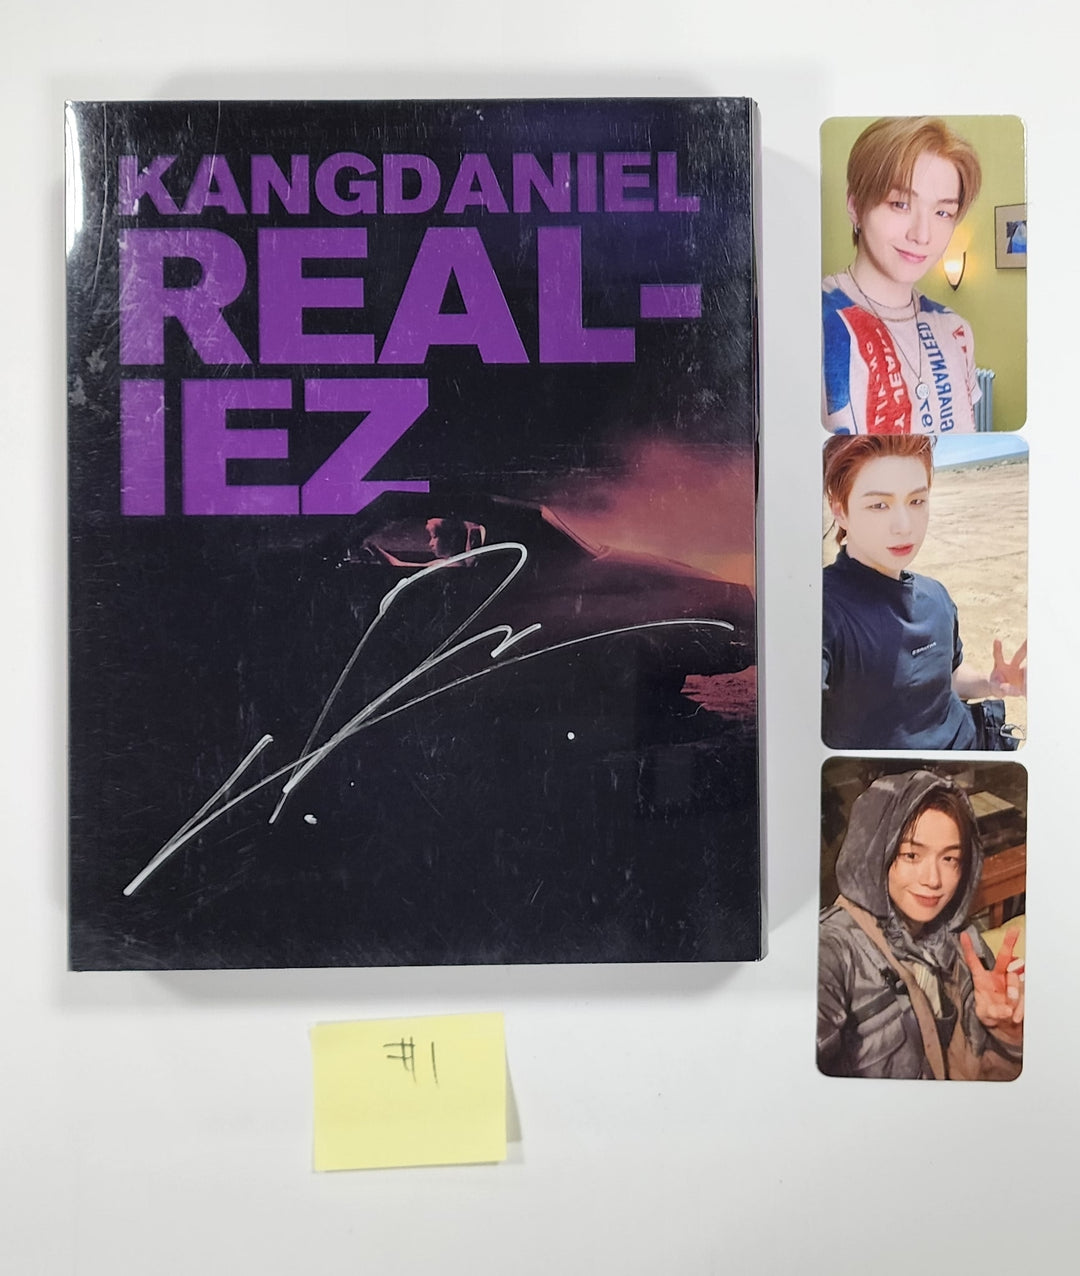 KANGDANIEL "REALIEZ" - Hand Autographed(Signed) Promo Album